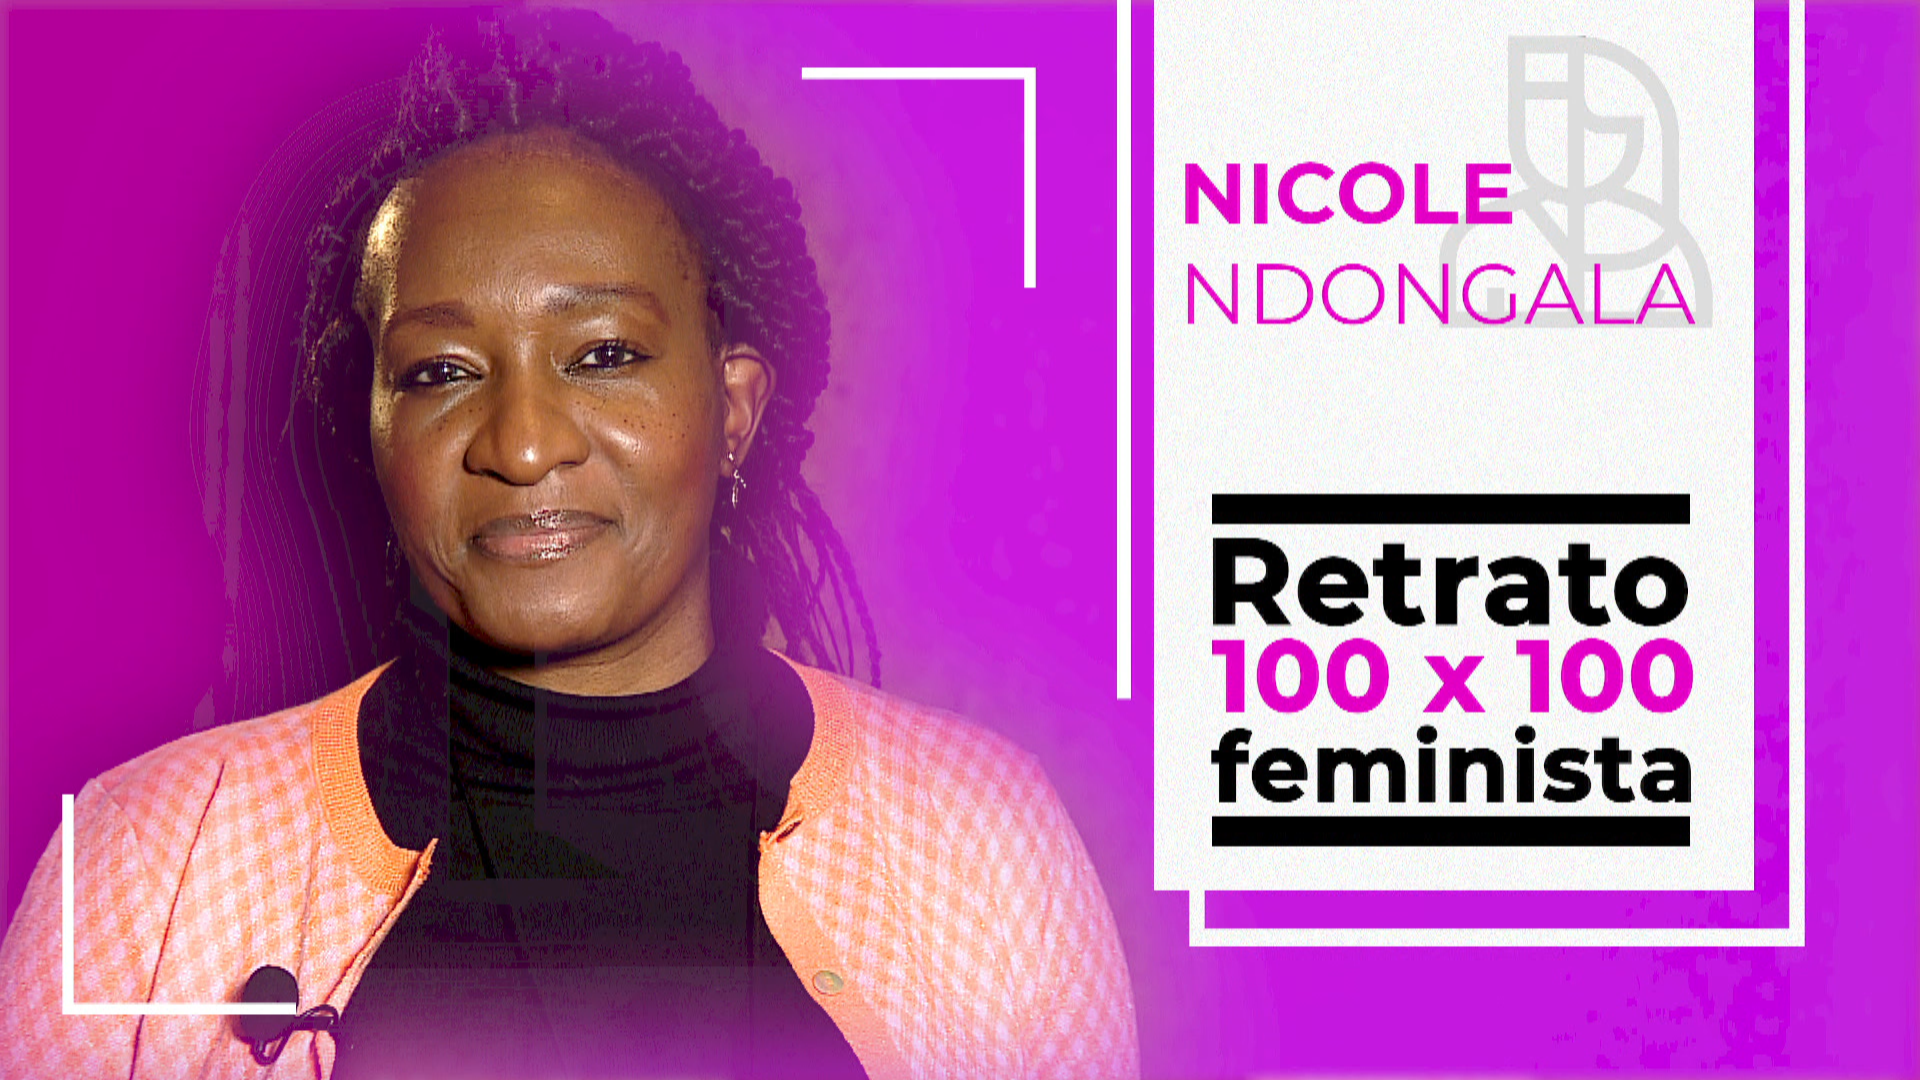 Ir al Video Objetivo Igualdad -Retrato 100x100 feminista: Nicole Ndongala